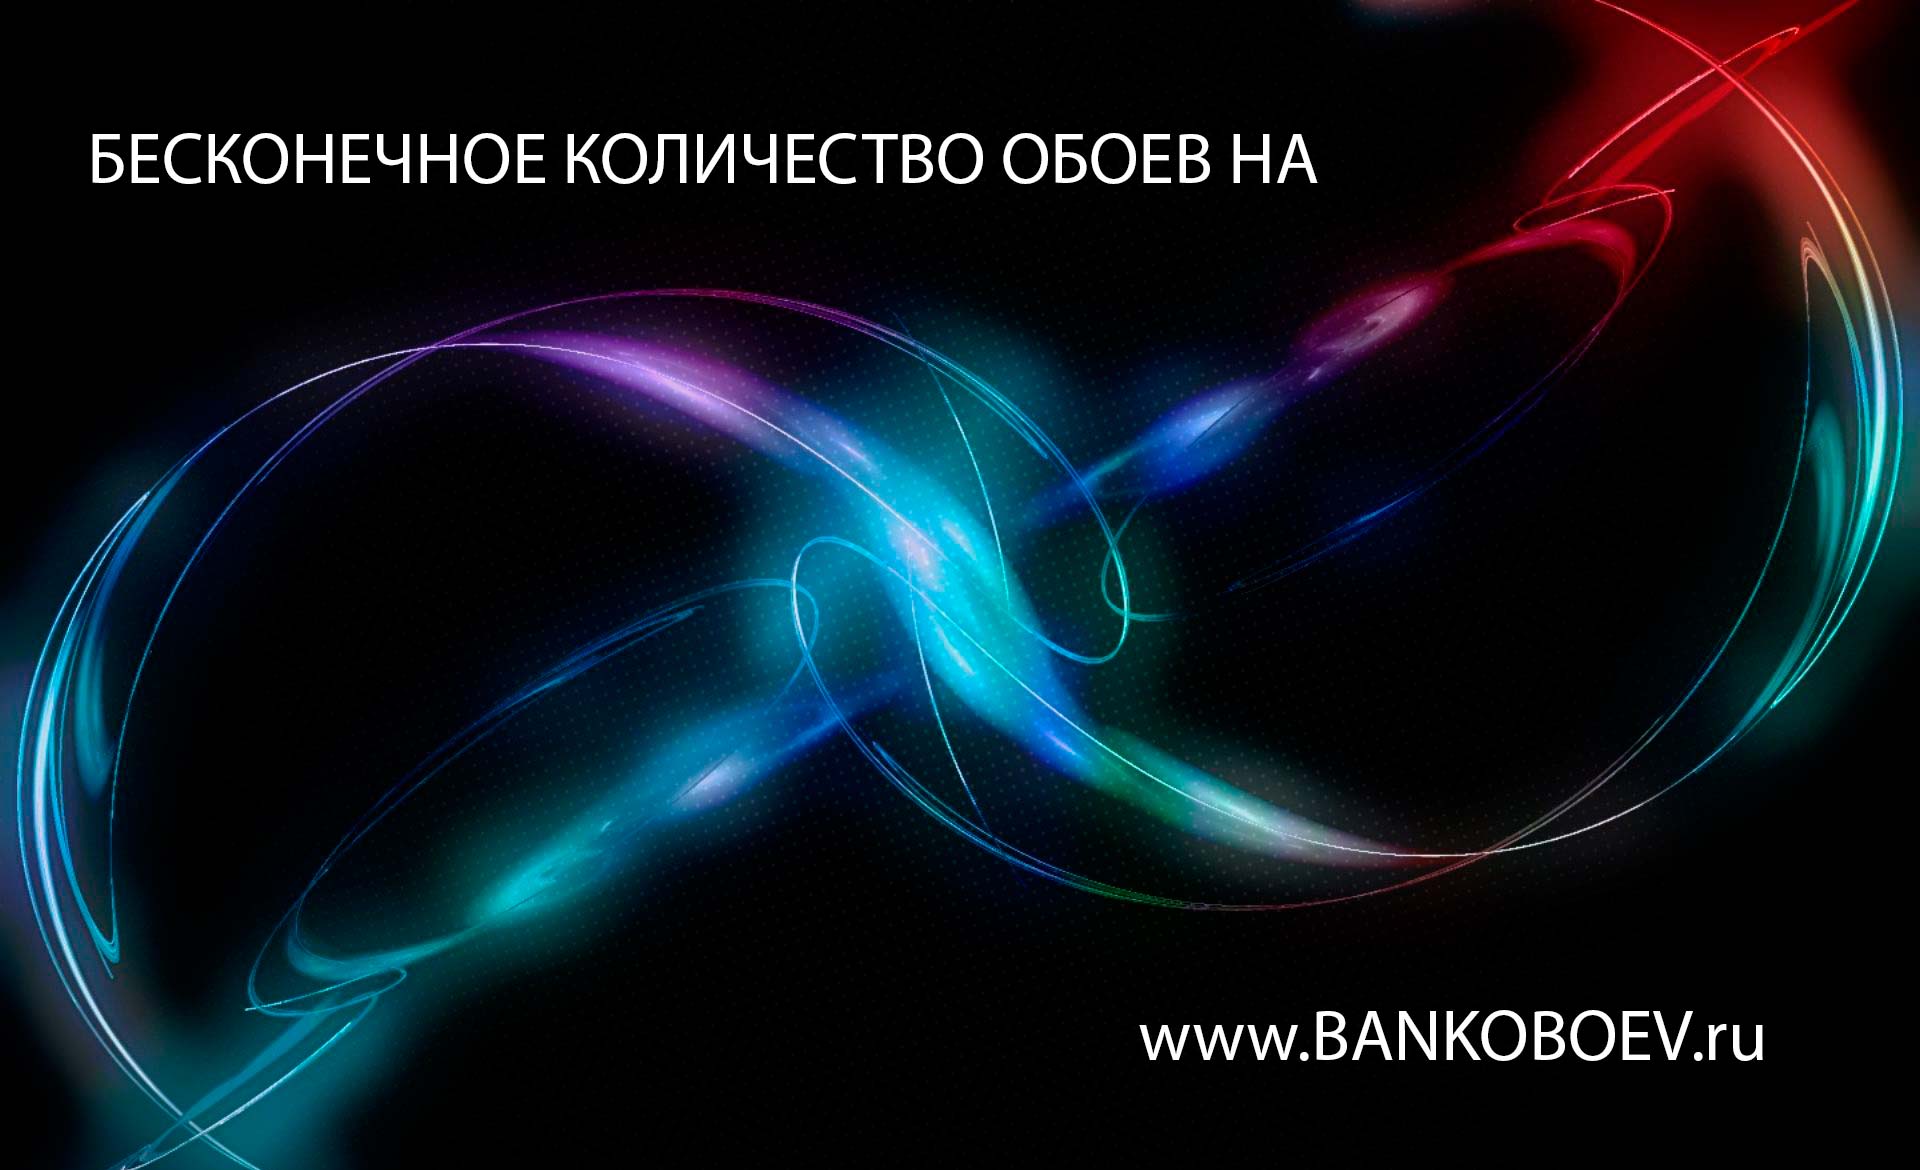 Bankoboev Ru Image Nta2na Jpg